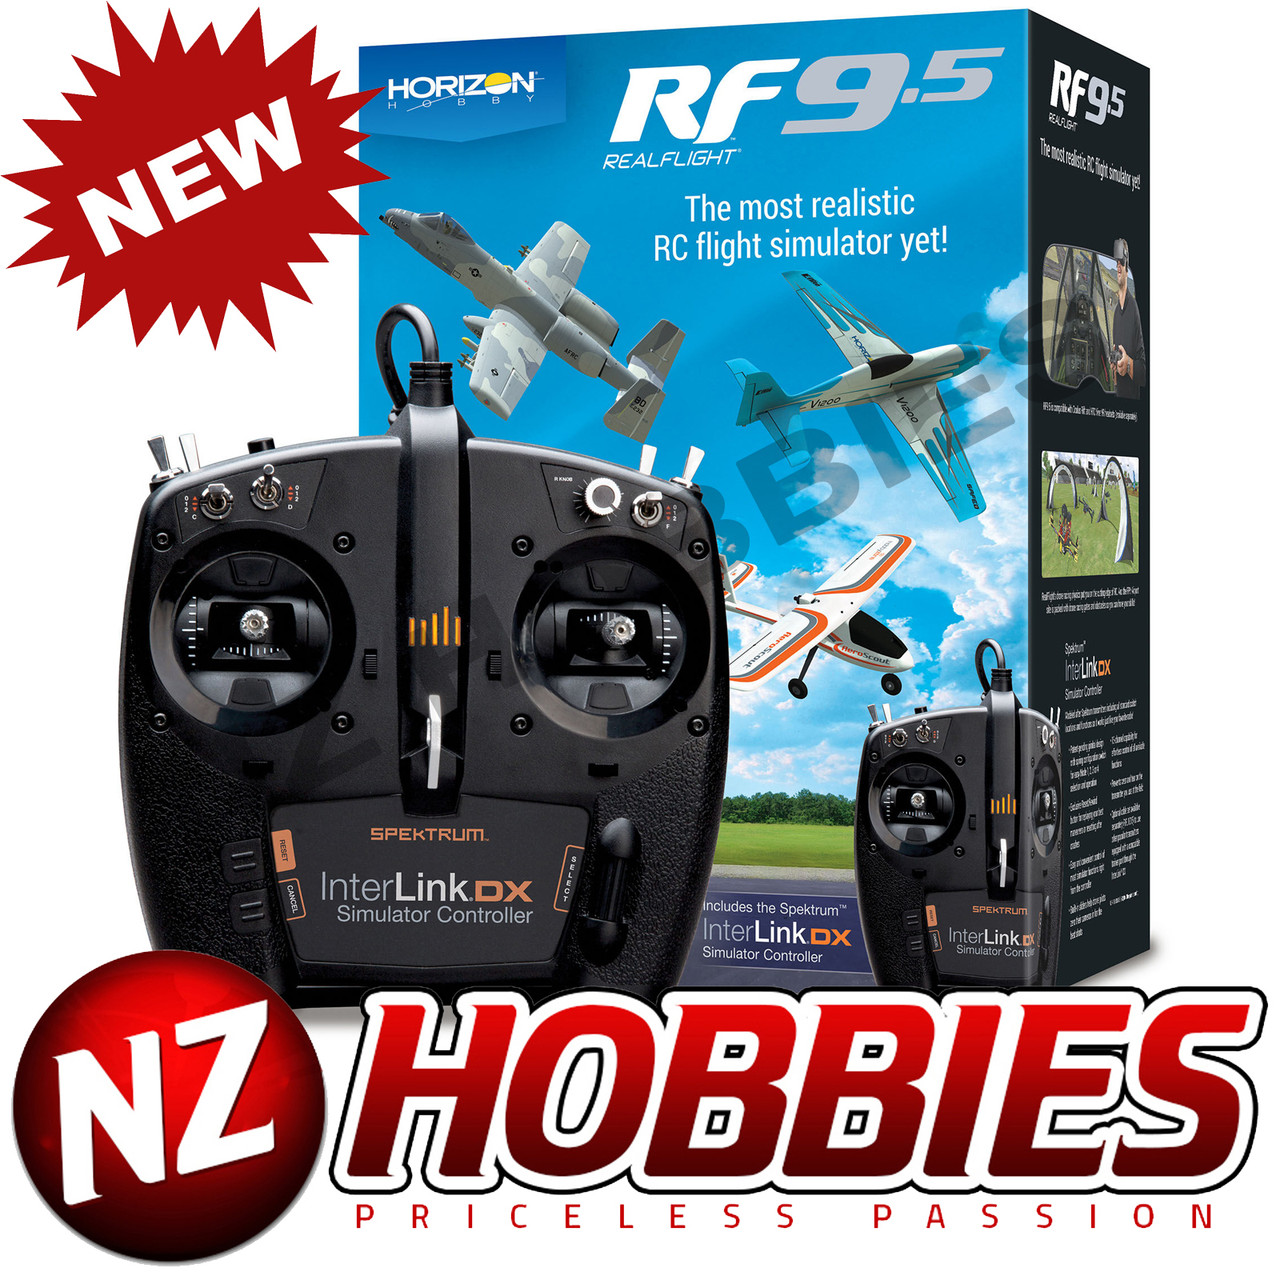 Horizon Realflight 9.5 Flight Simulator Software & Interlink Controller RFL1200 